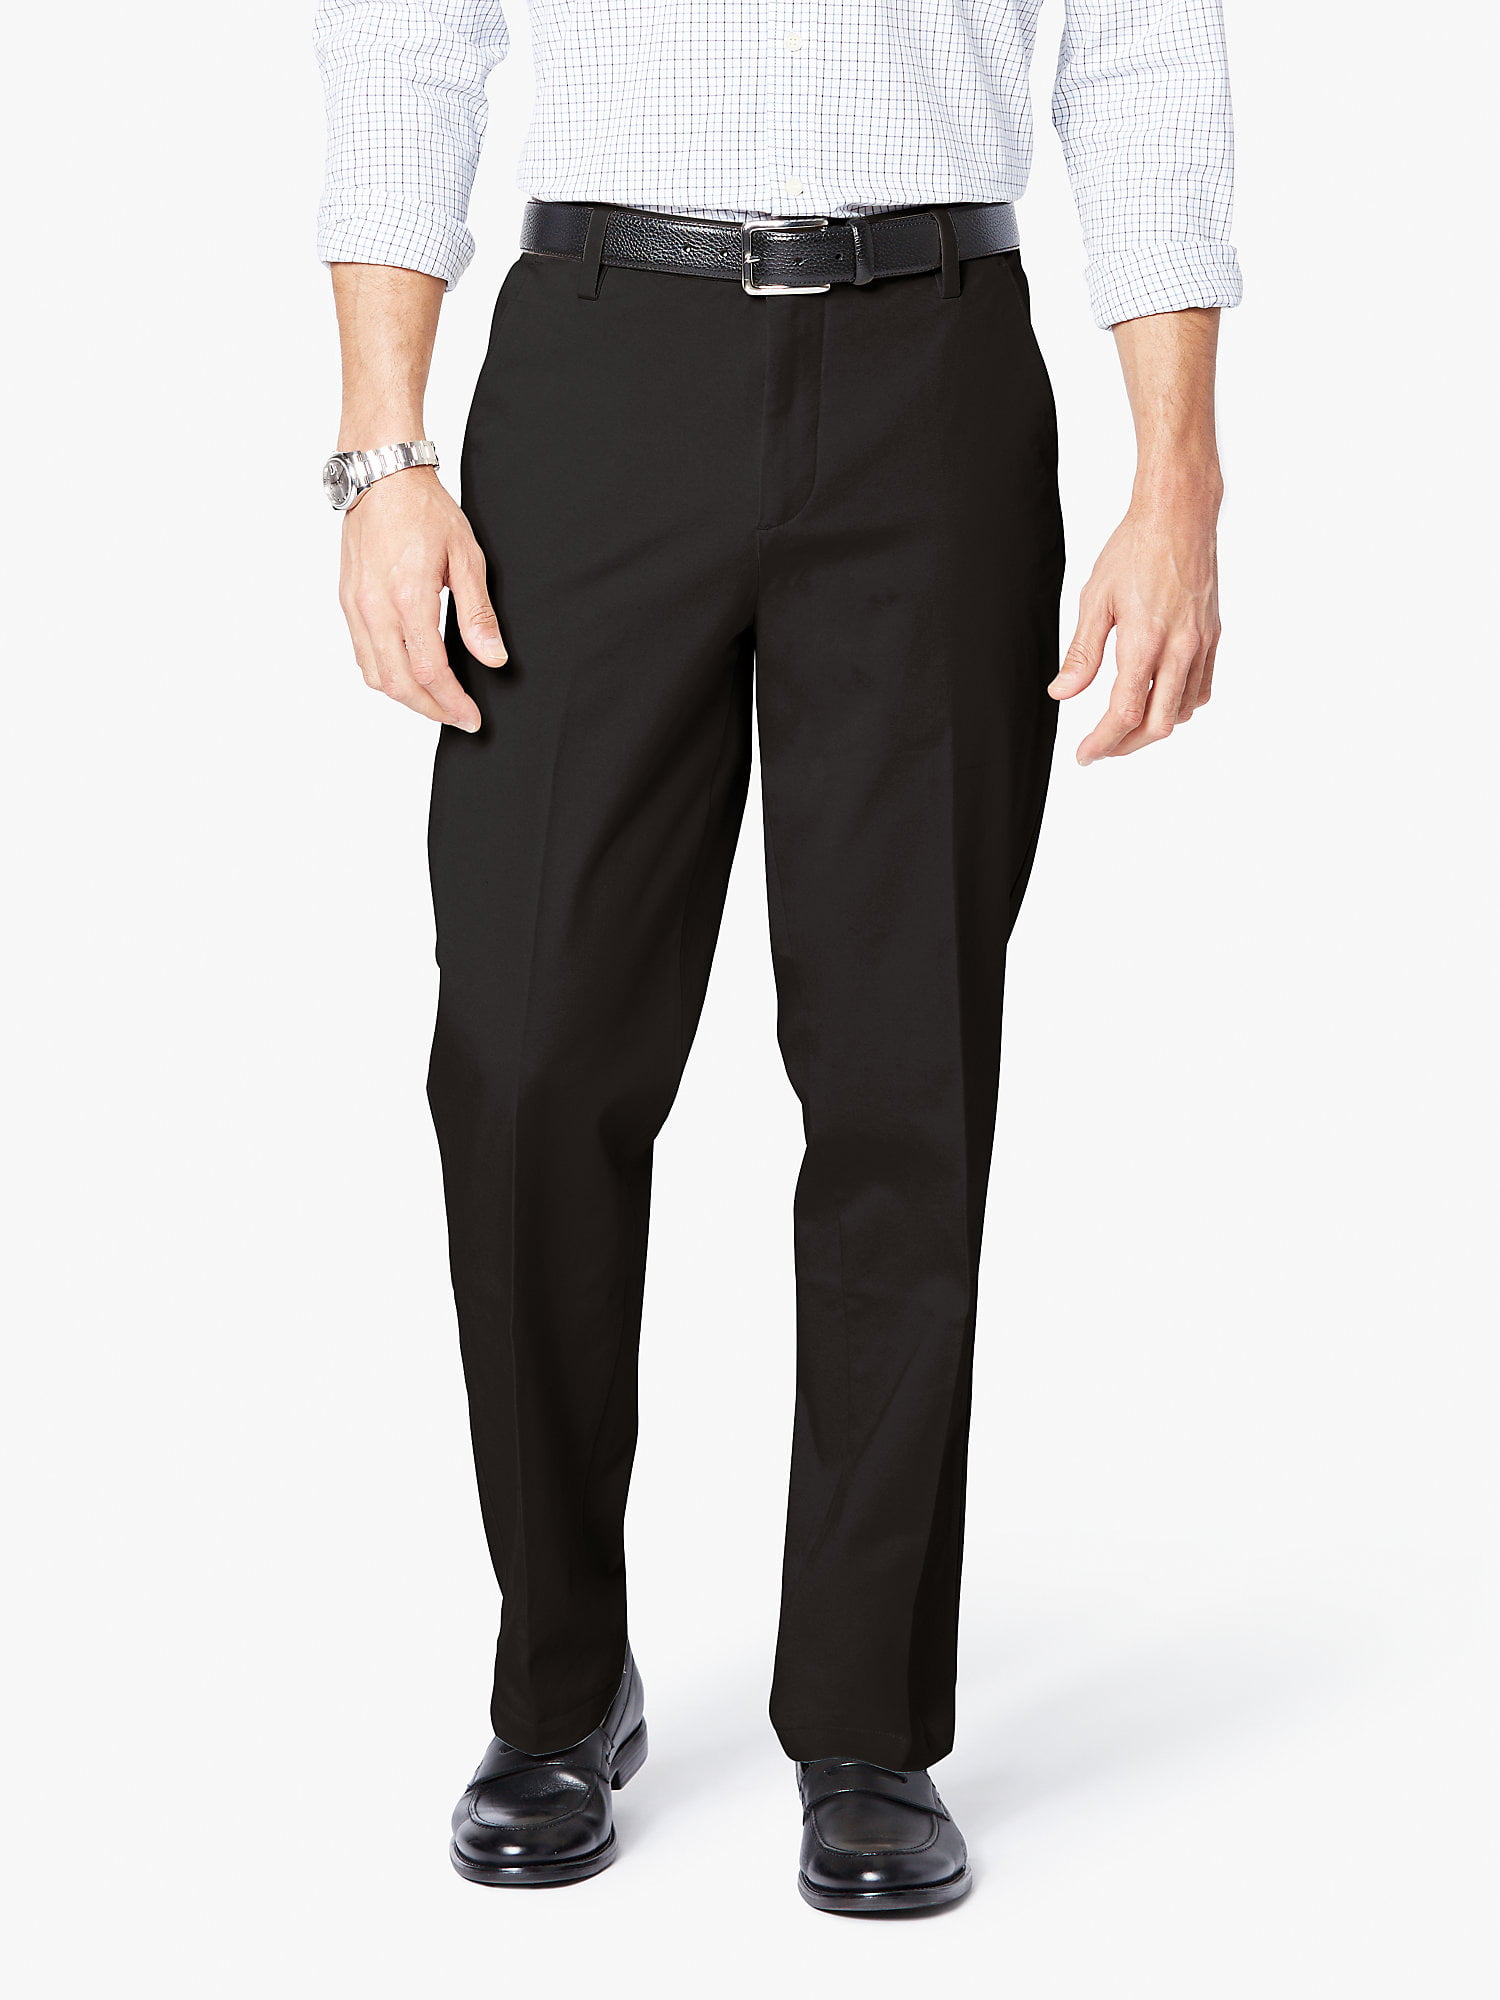 Dockers Mens Big & Tall Classic Fit Workday Khaki Smart 360 Flex Pants D3 Casual Pants